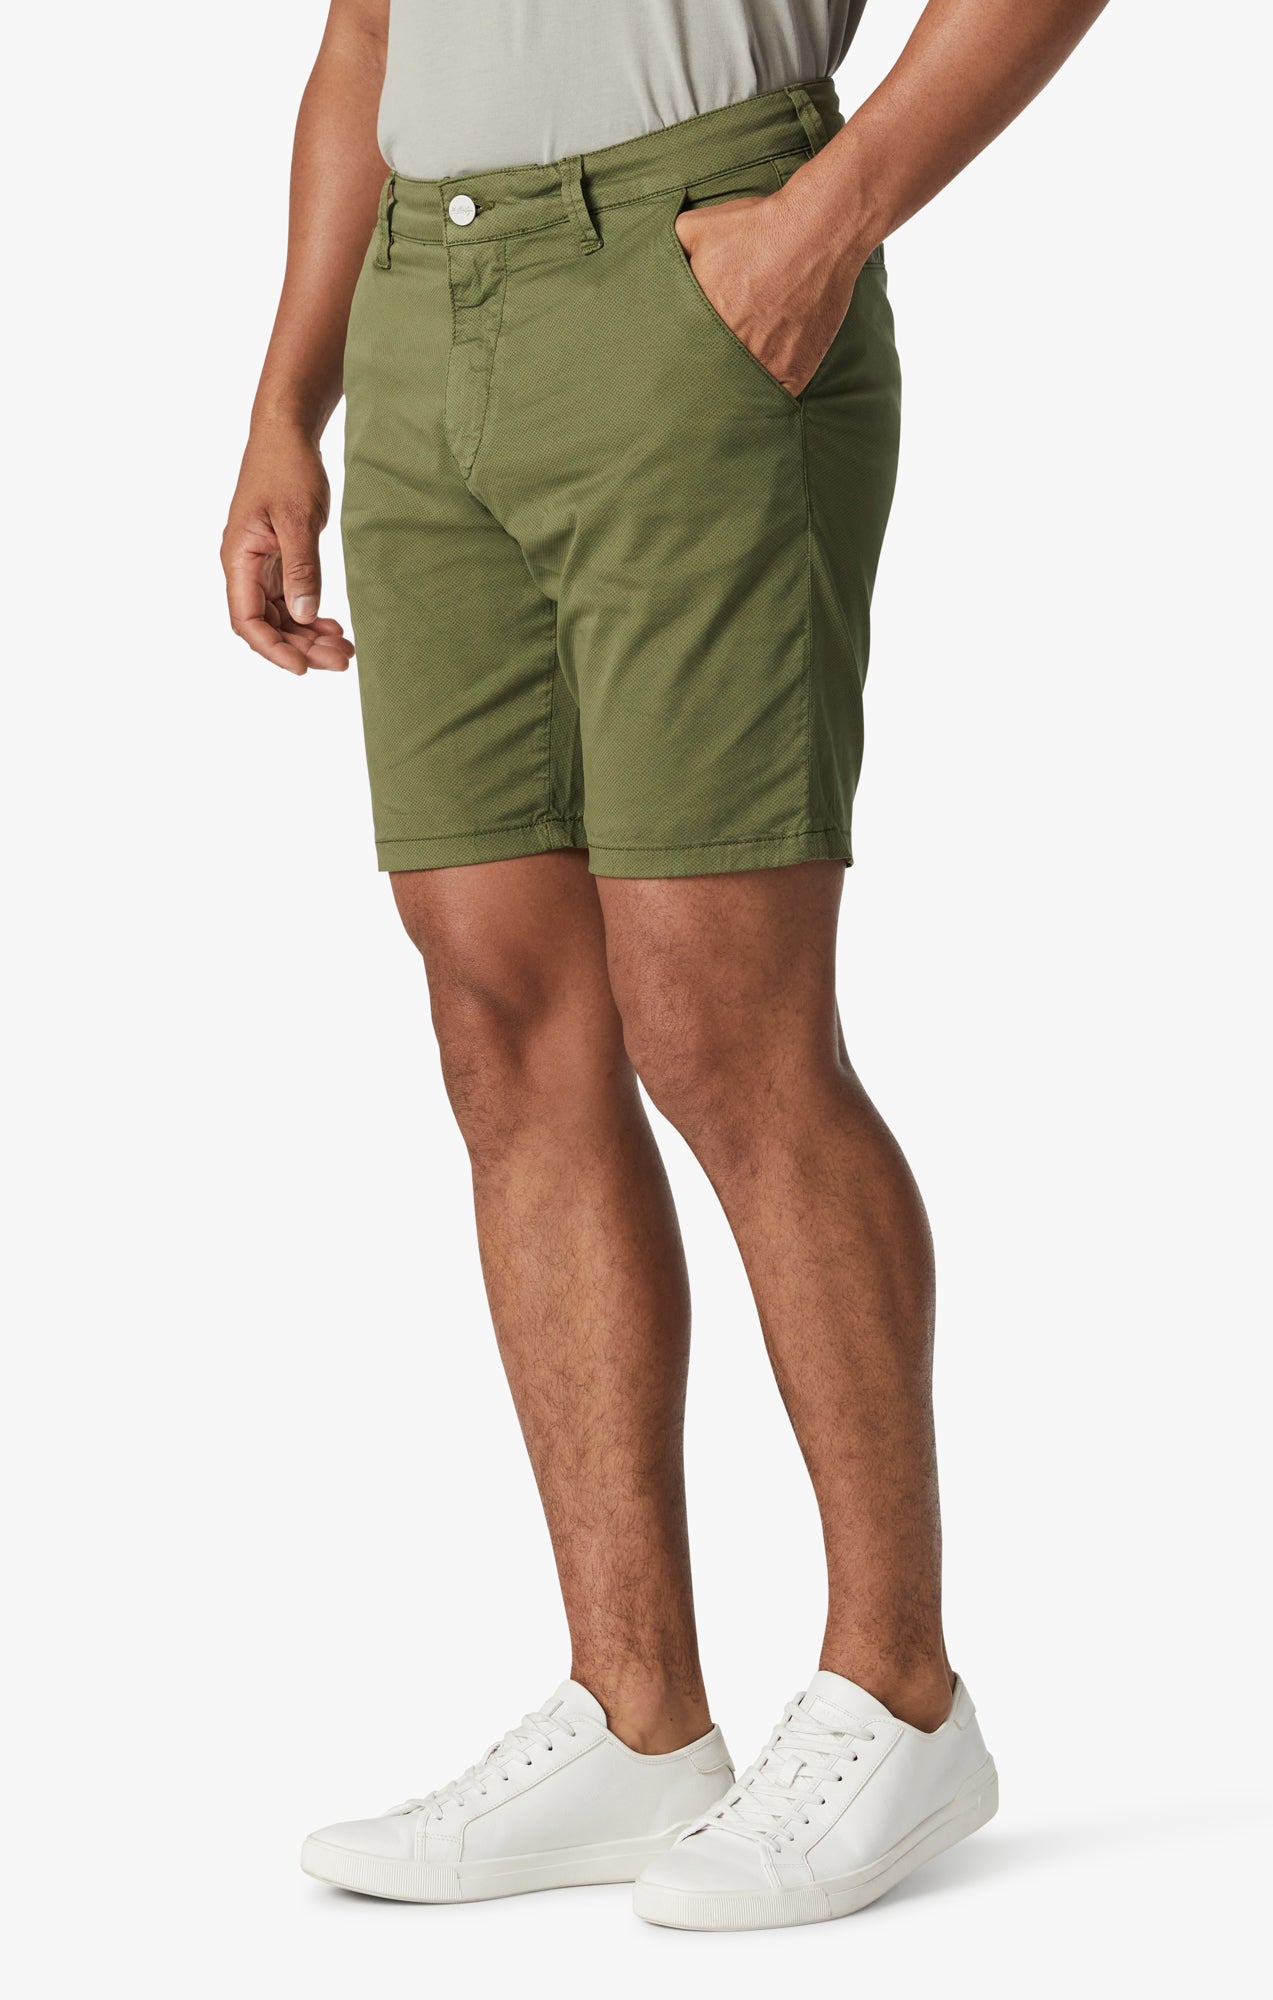 Arizona Shorts In Green Tie Print Image 4